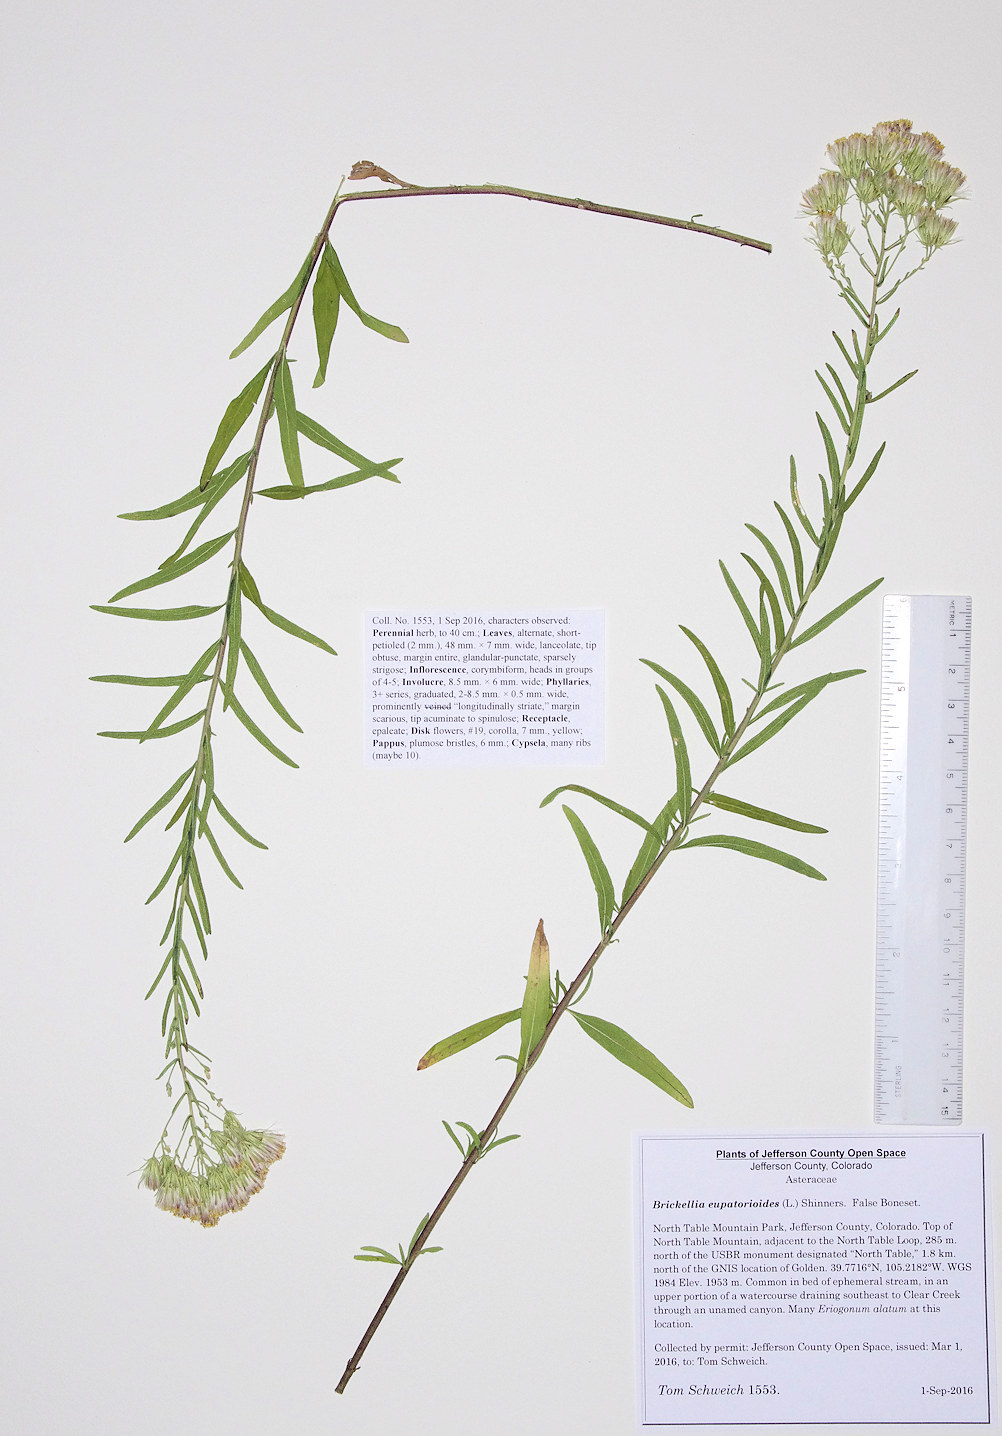 Asteraceae Brickellia eupatorioides